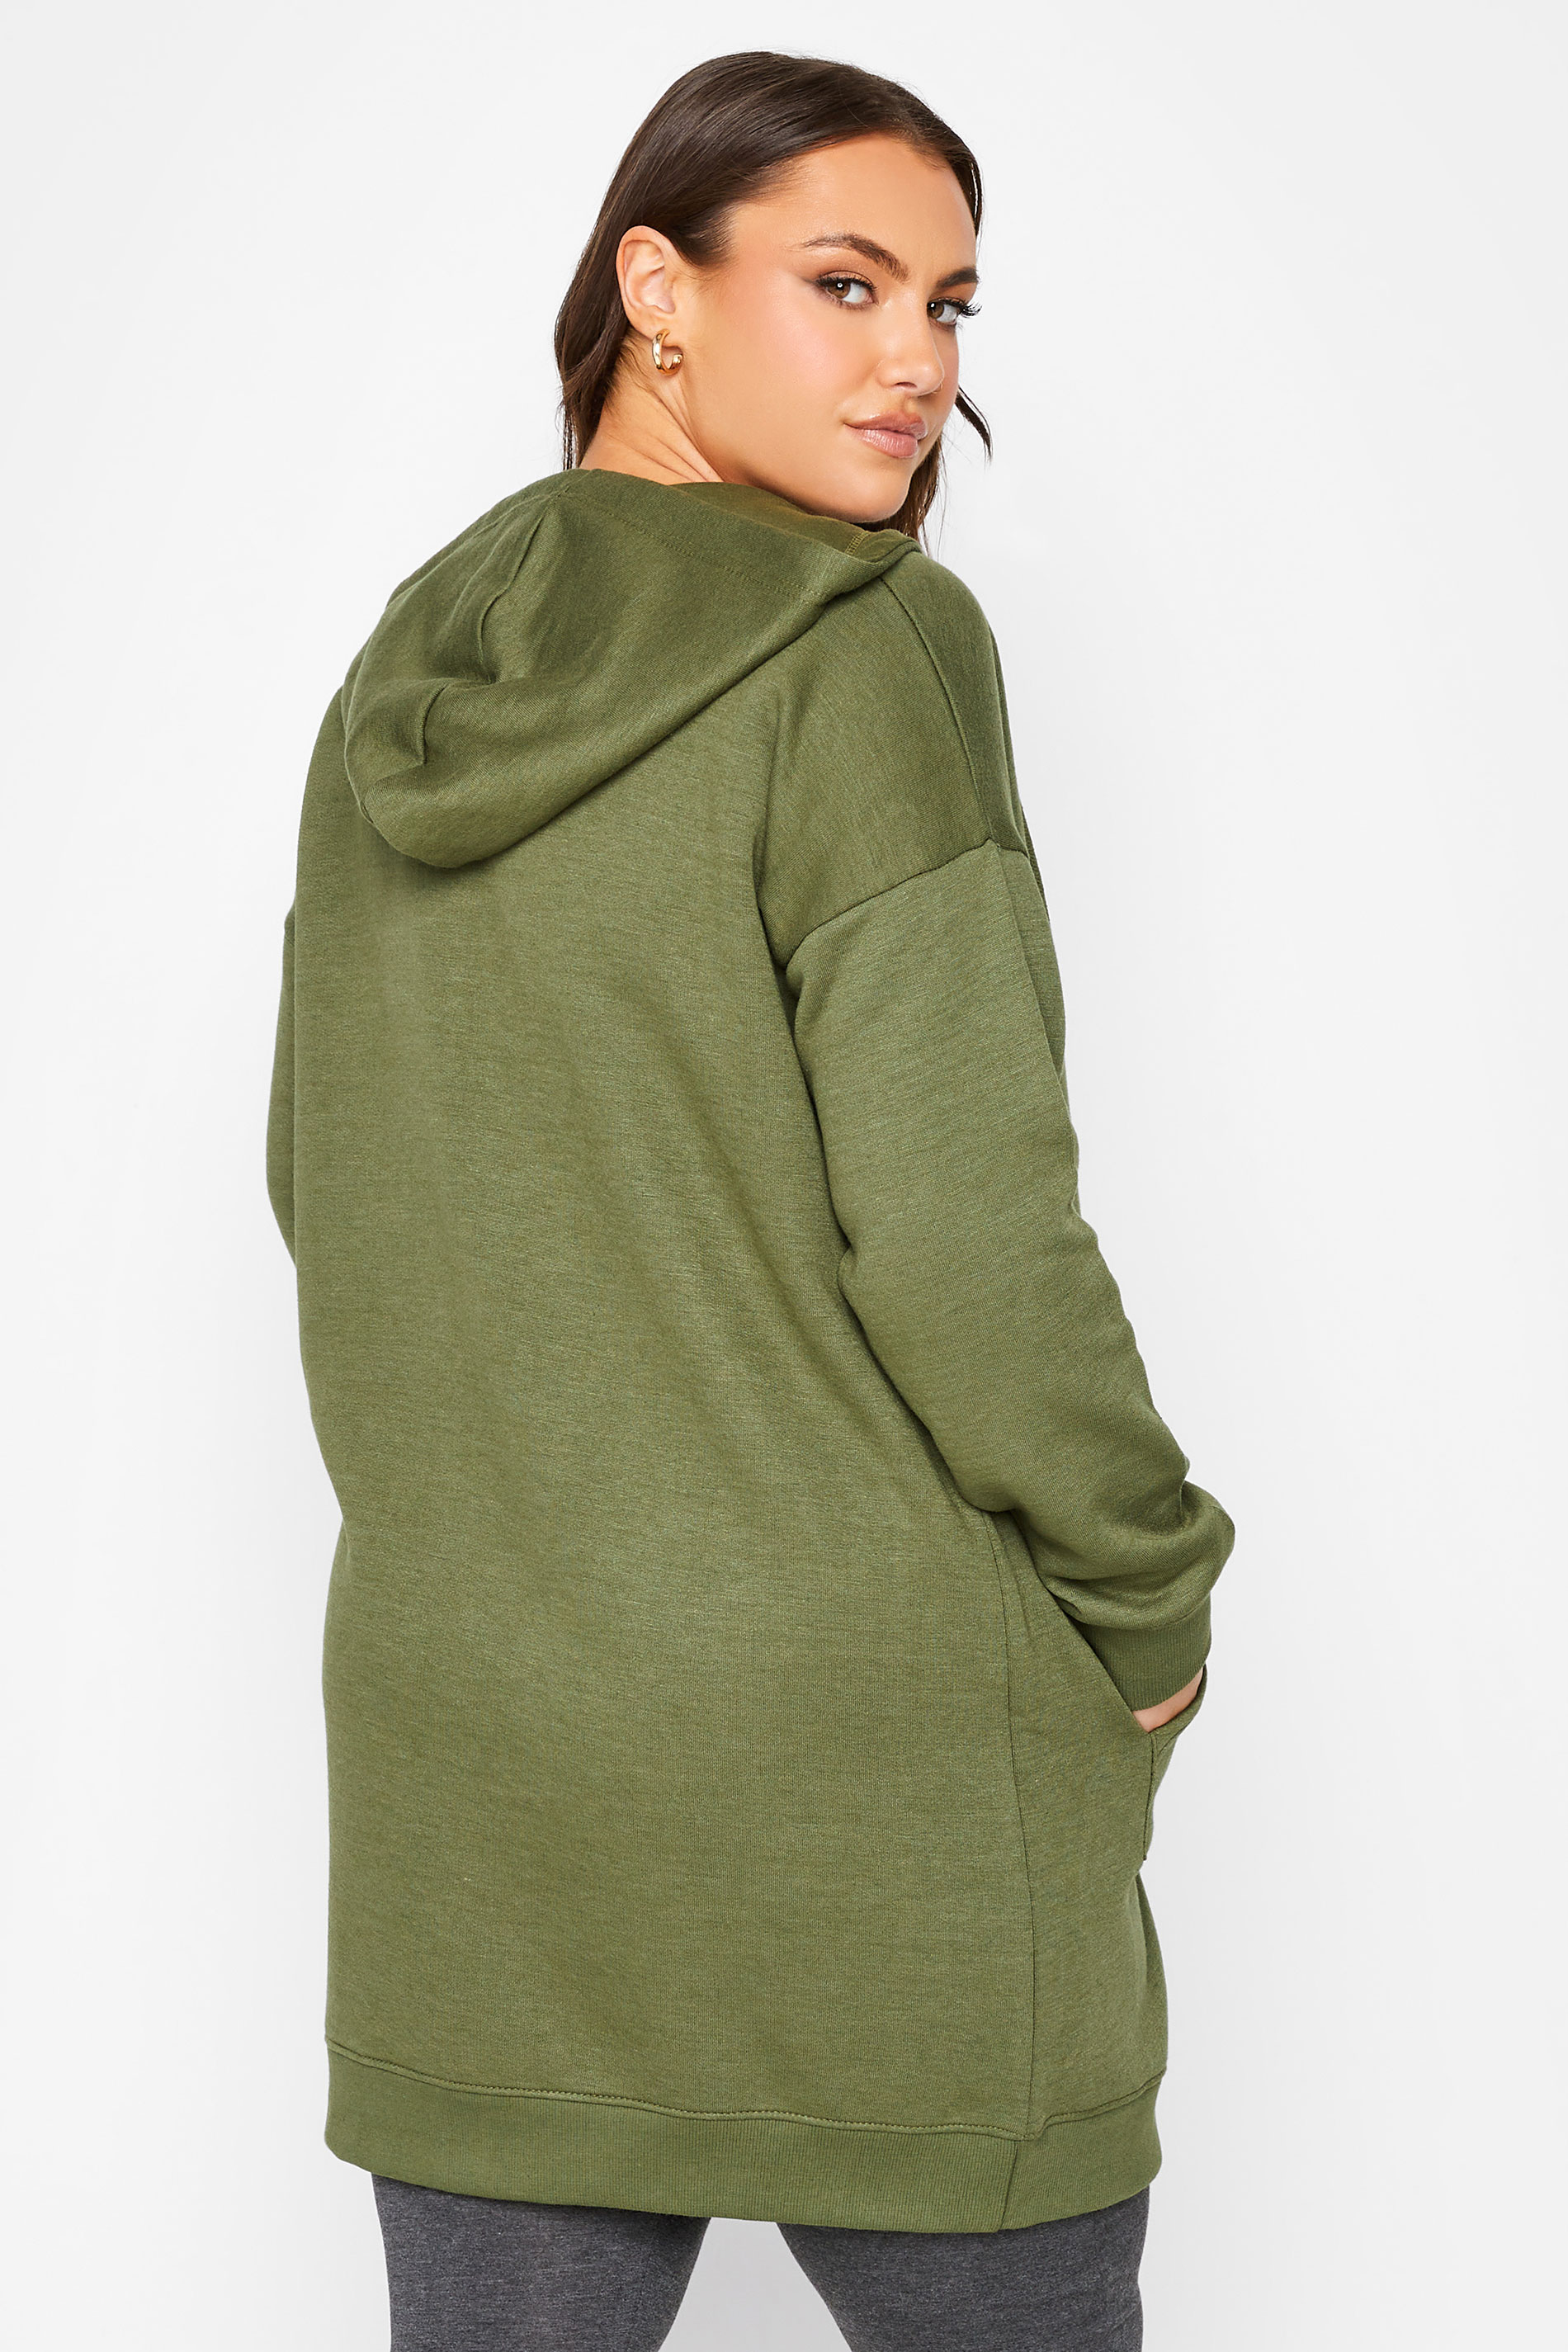 Curve Plus Size Womens Khaki Green Longline Zip Hoodie | Yours Clothing 3